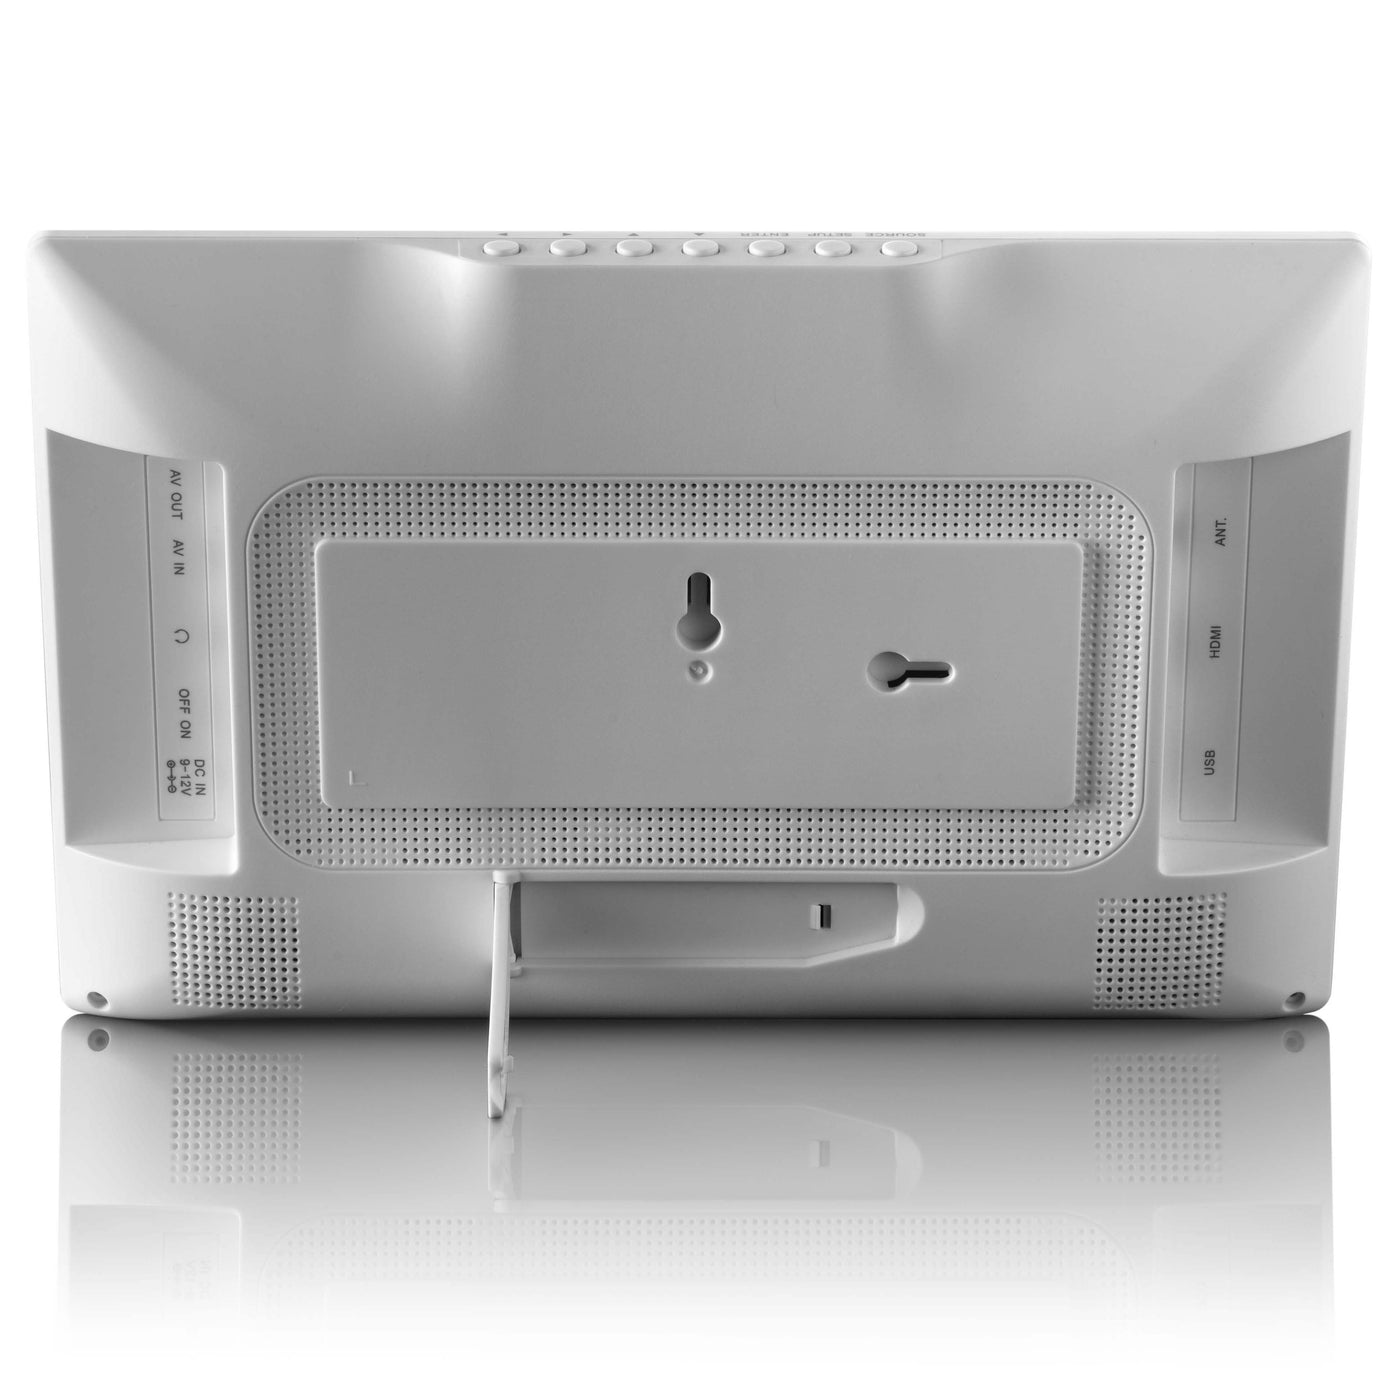 LENCO TFT-1038WH - 10" LED TV with DVB-T2, AUX IN - White